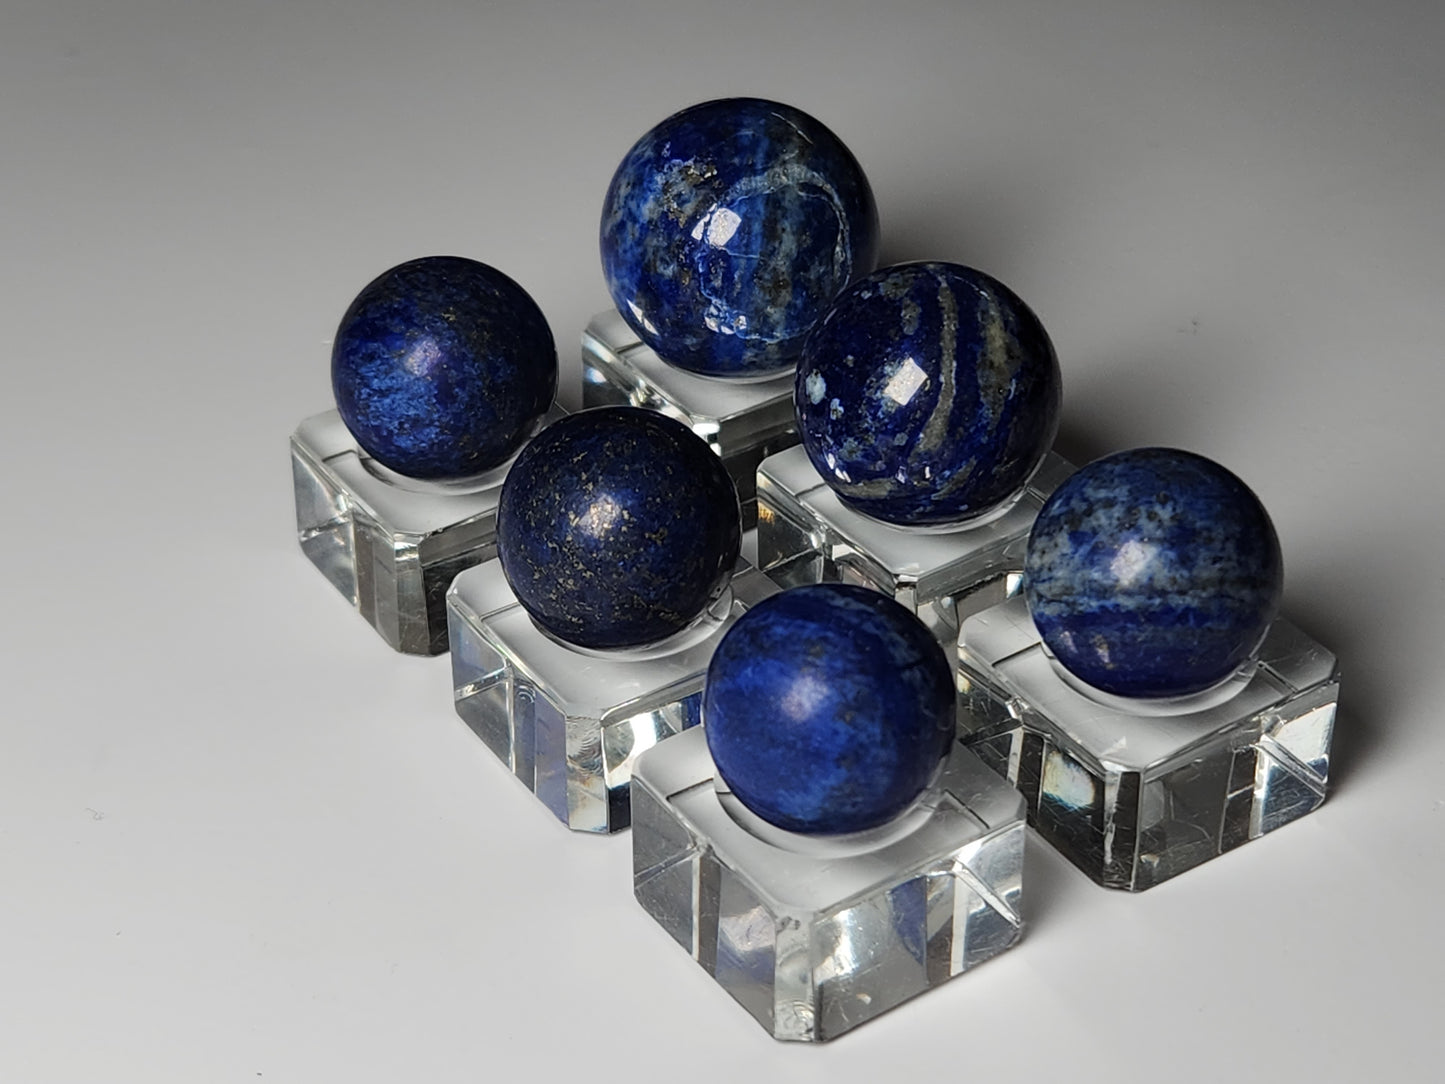 Lapis Lazuli Crystal Sphere - choose your favorite